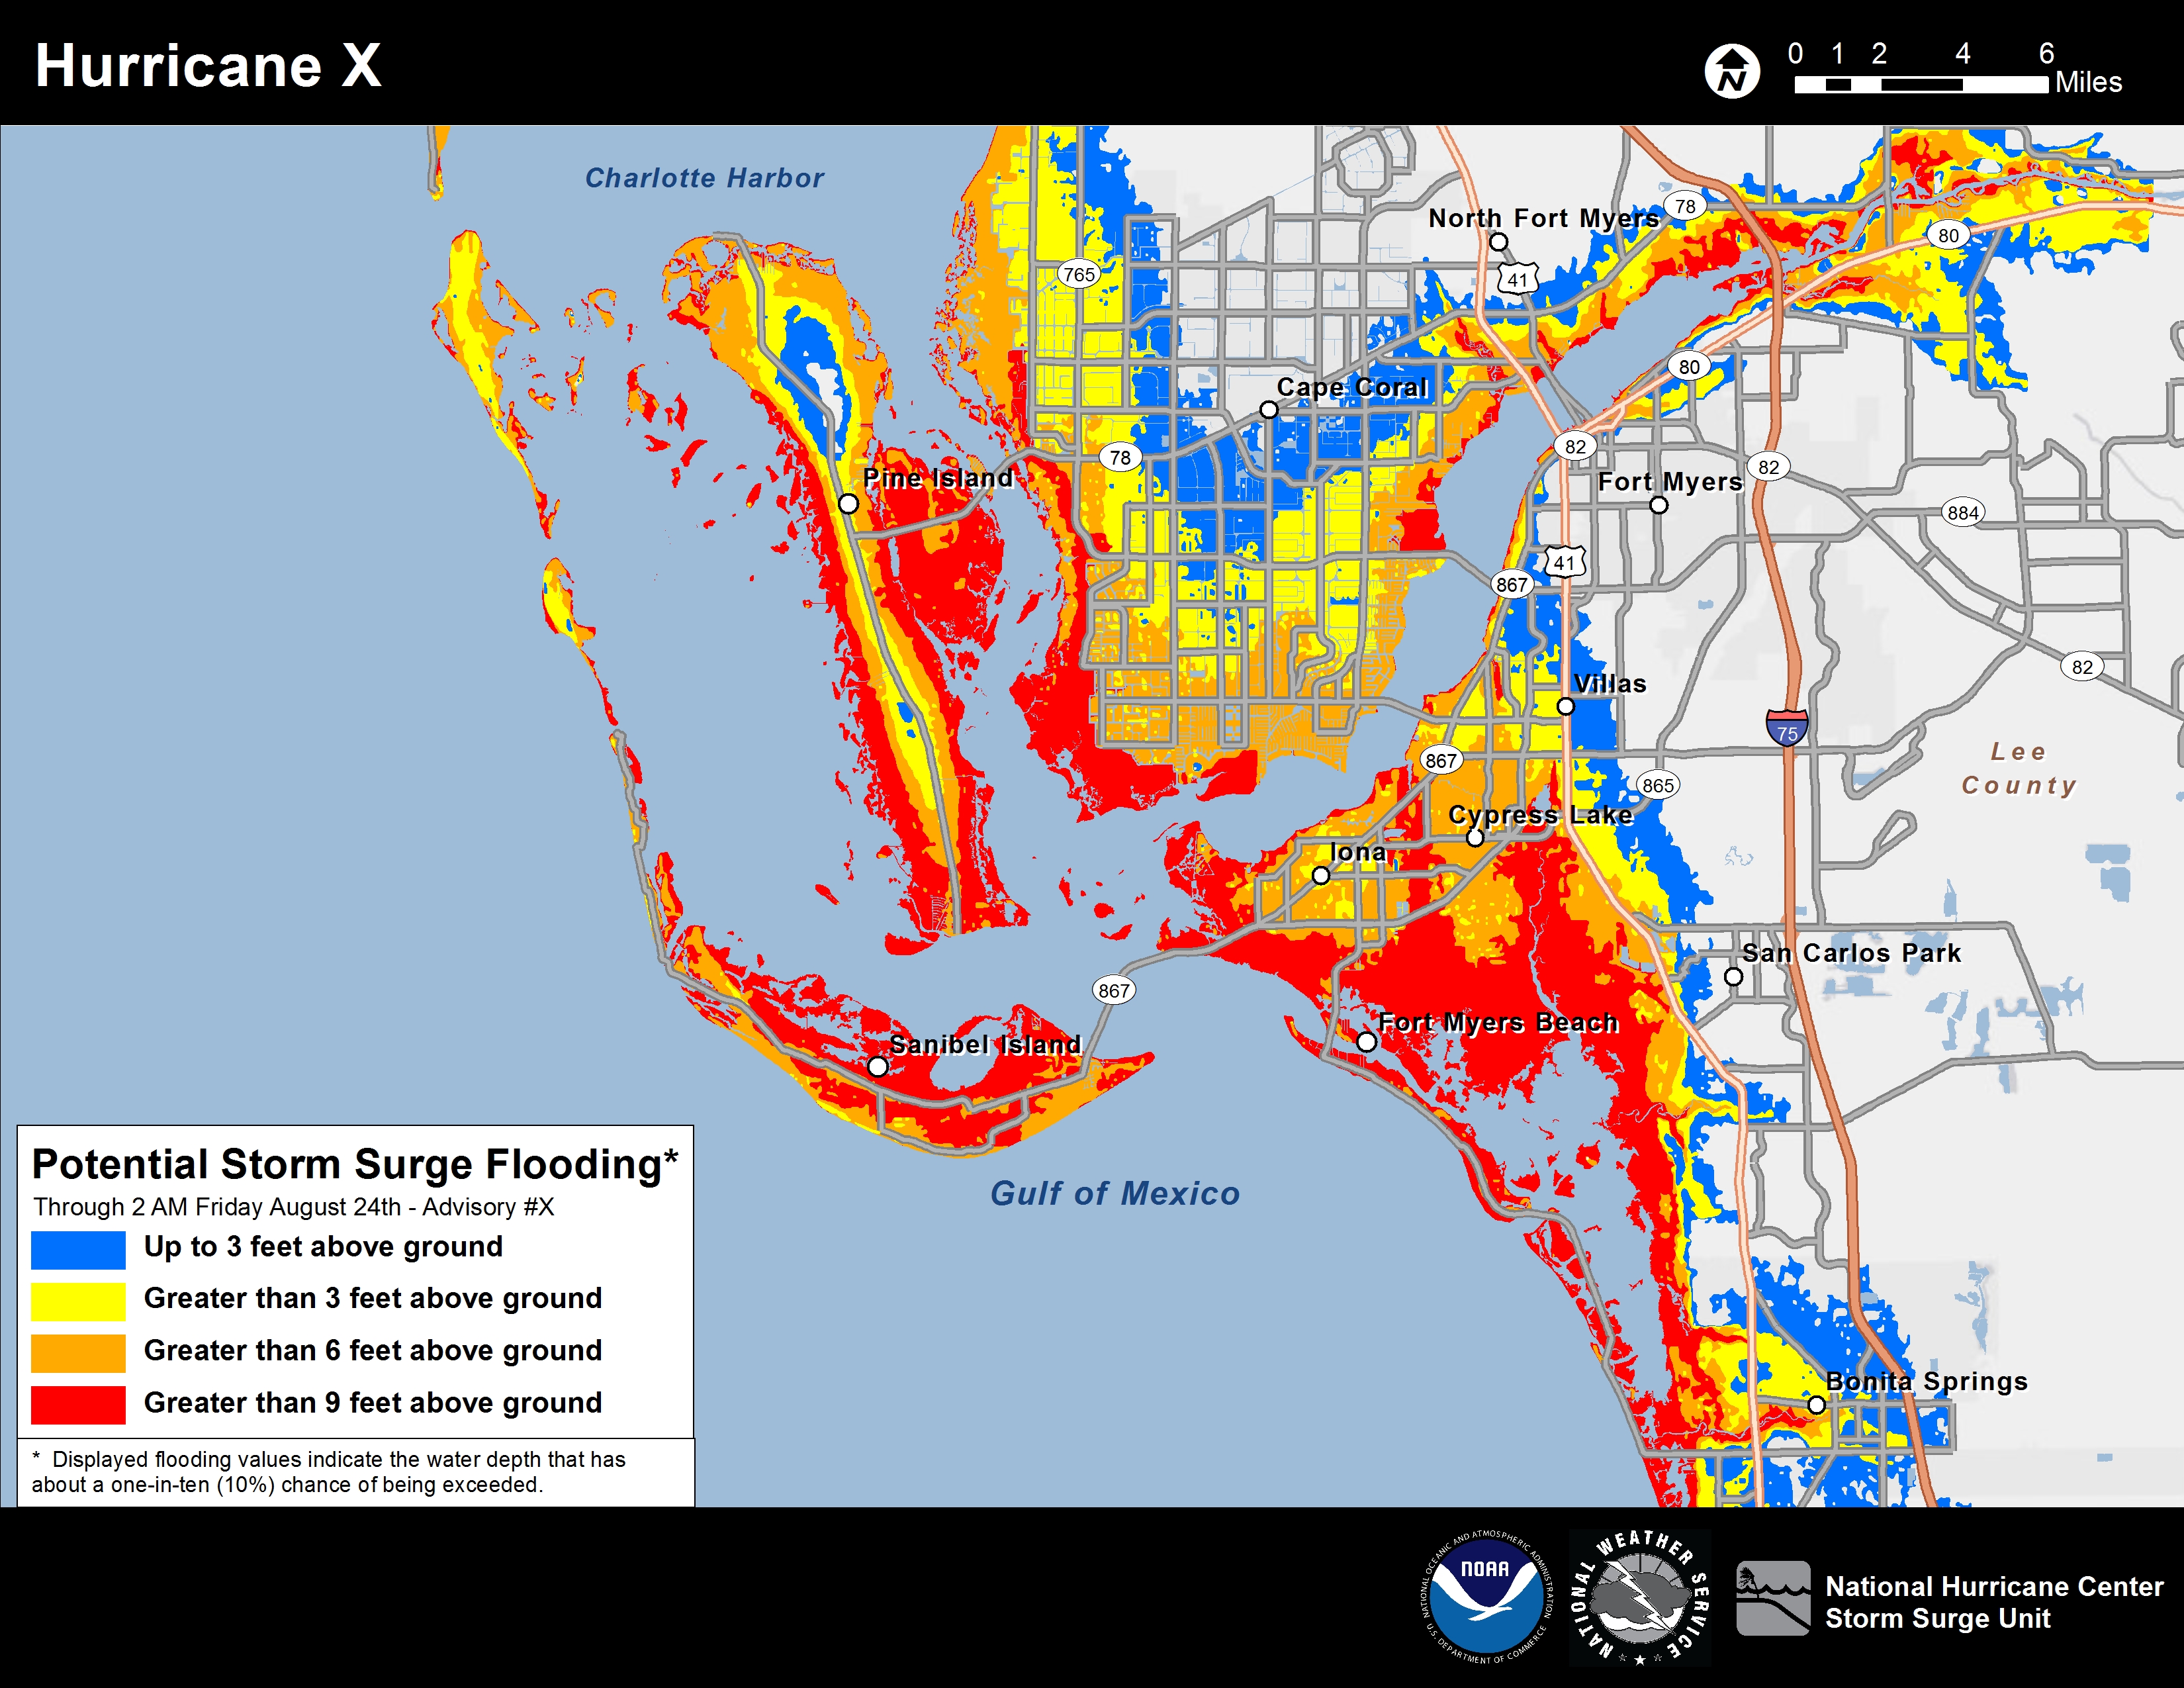 Potential coast storm surge flooding map for Southwest Florida. 